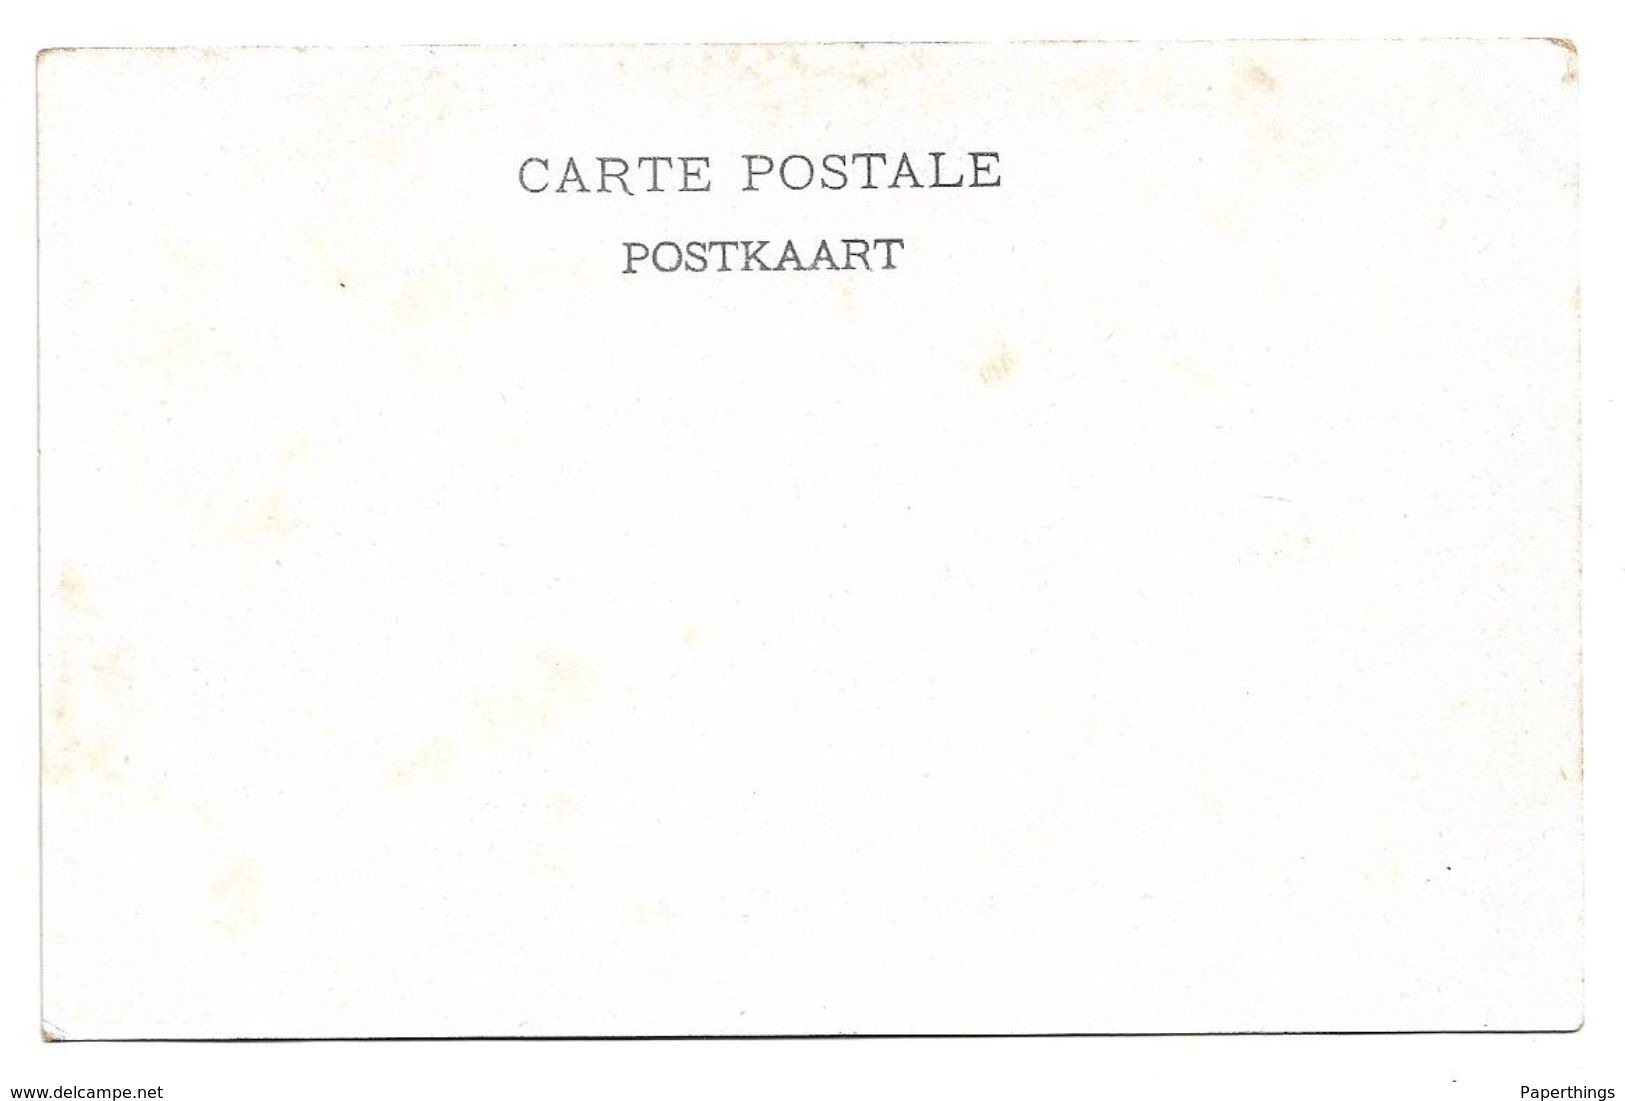 Old Postcard, Belgium, Gent, Gand, - Petit Beguinage. - Gent